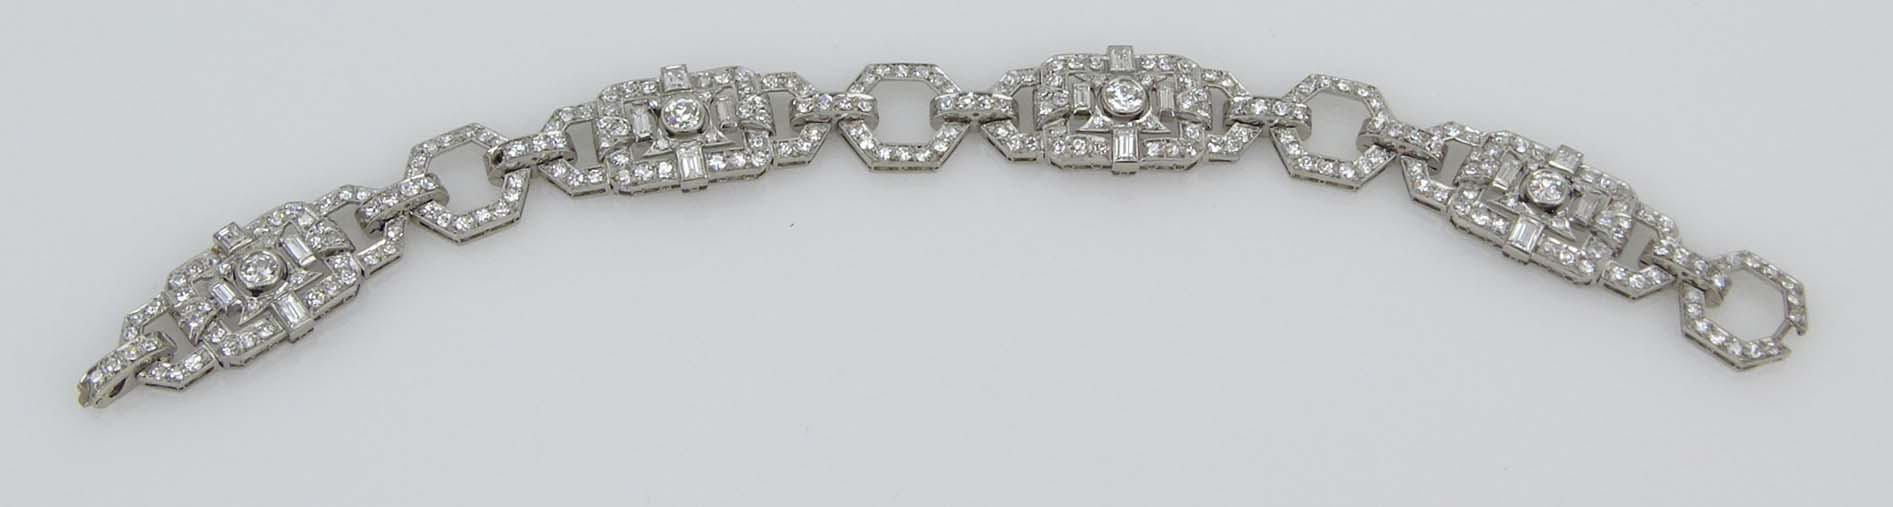 French Art Deco Old European Cut, Emerald Cut and Baguette Cut Diamond and Platinum Bracelet. 